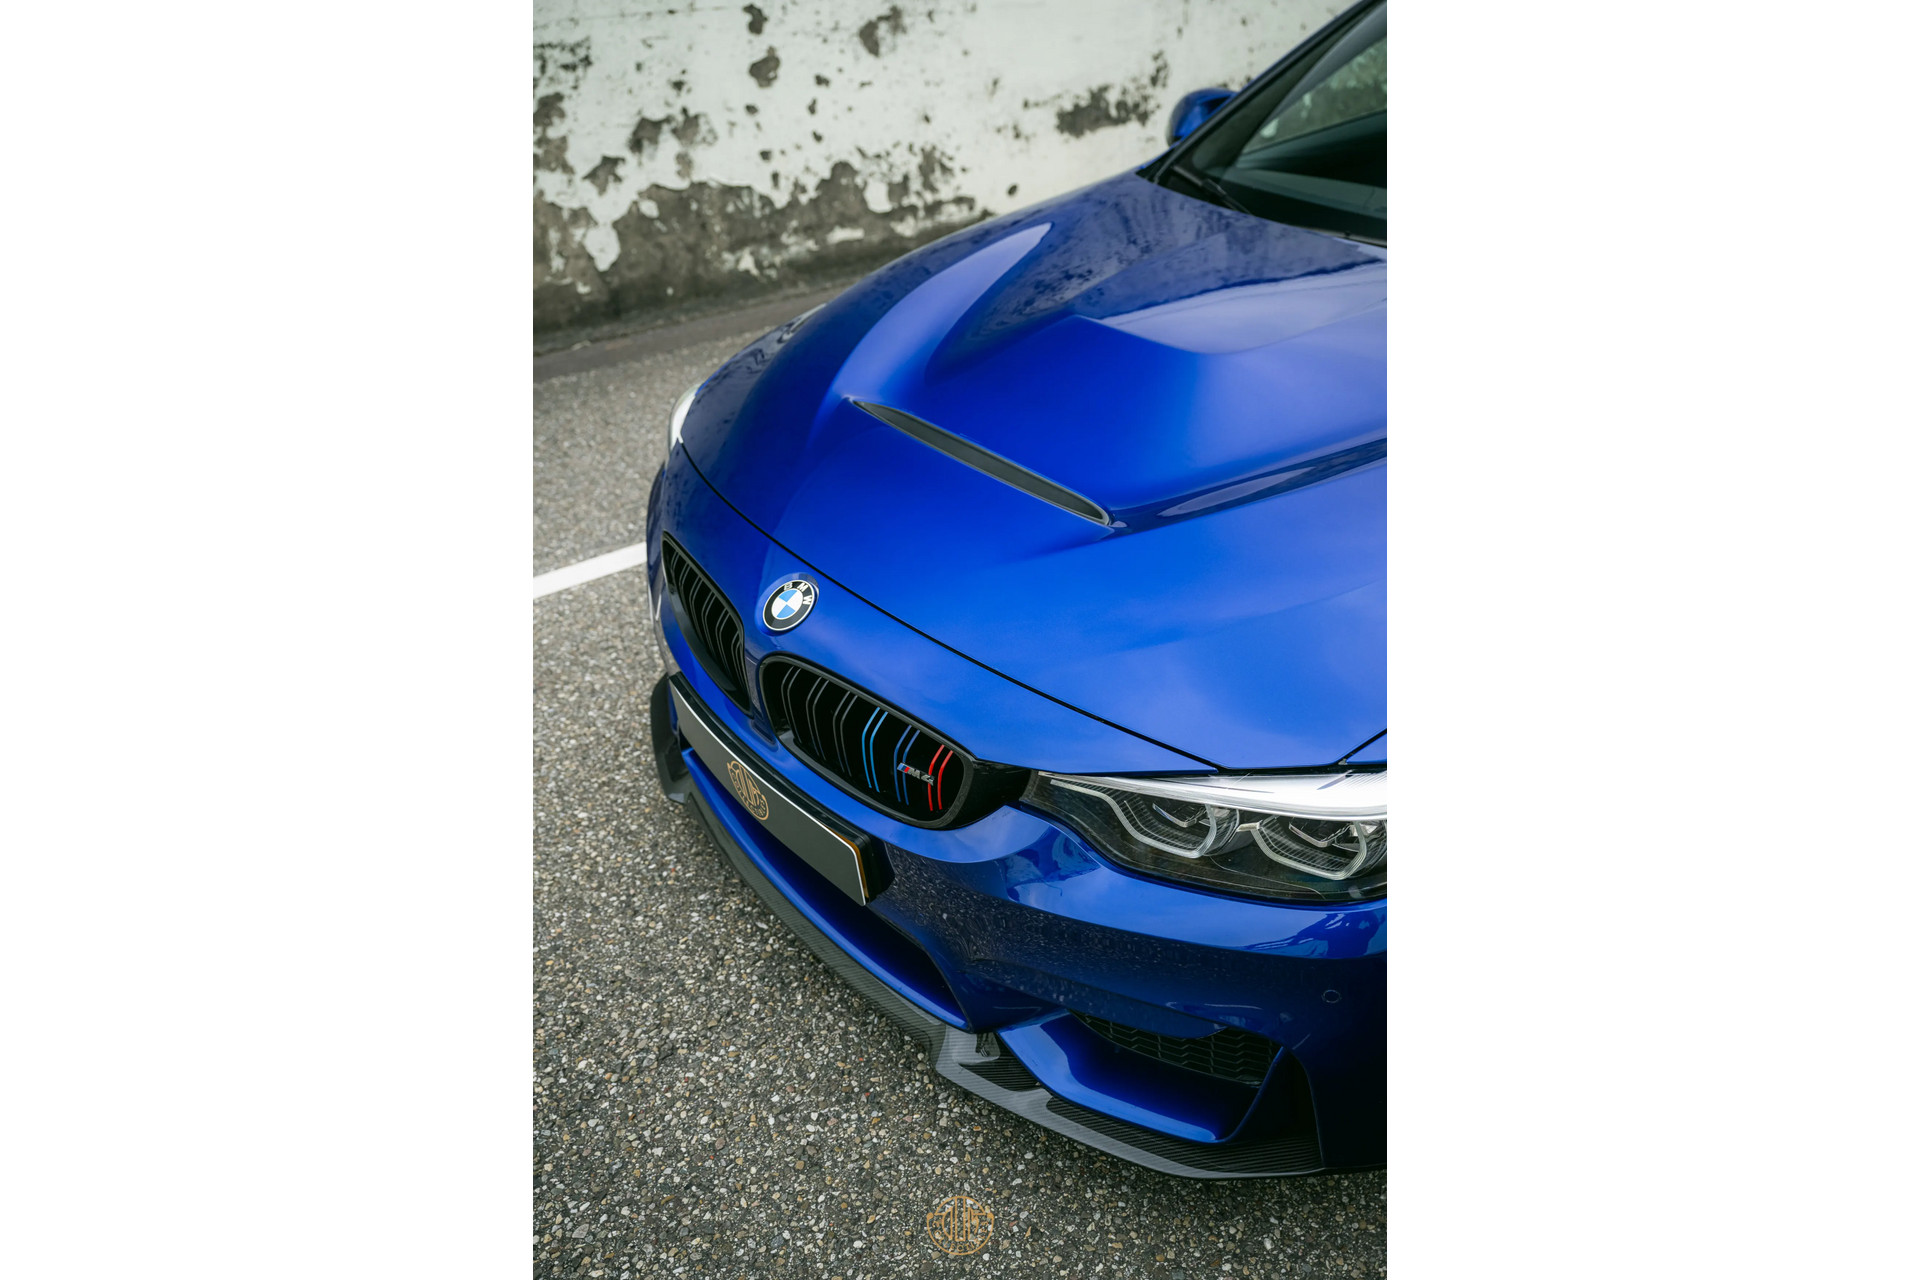 BMW 4 Serie Coupé M4 CS 2017 San marino blau metallic 34